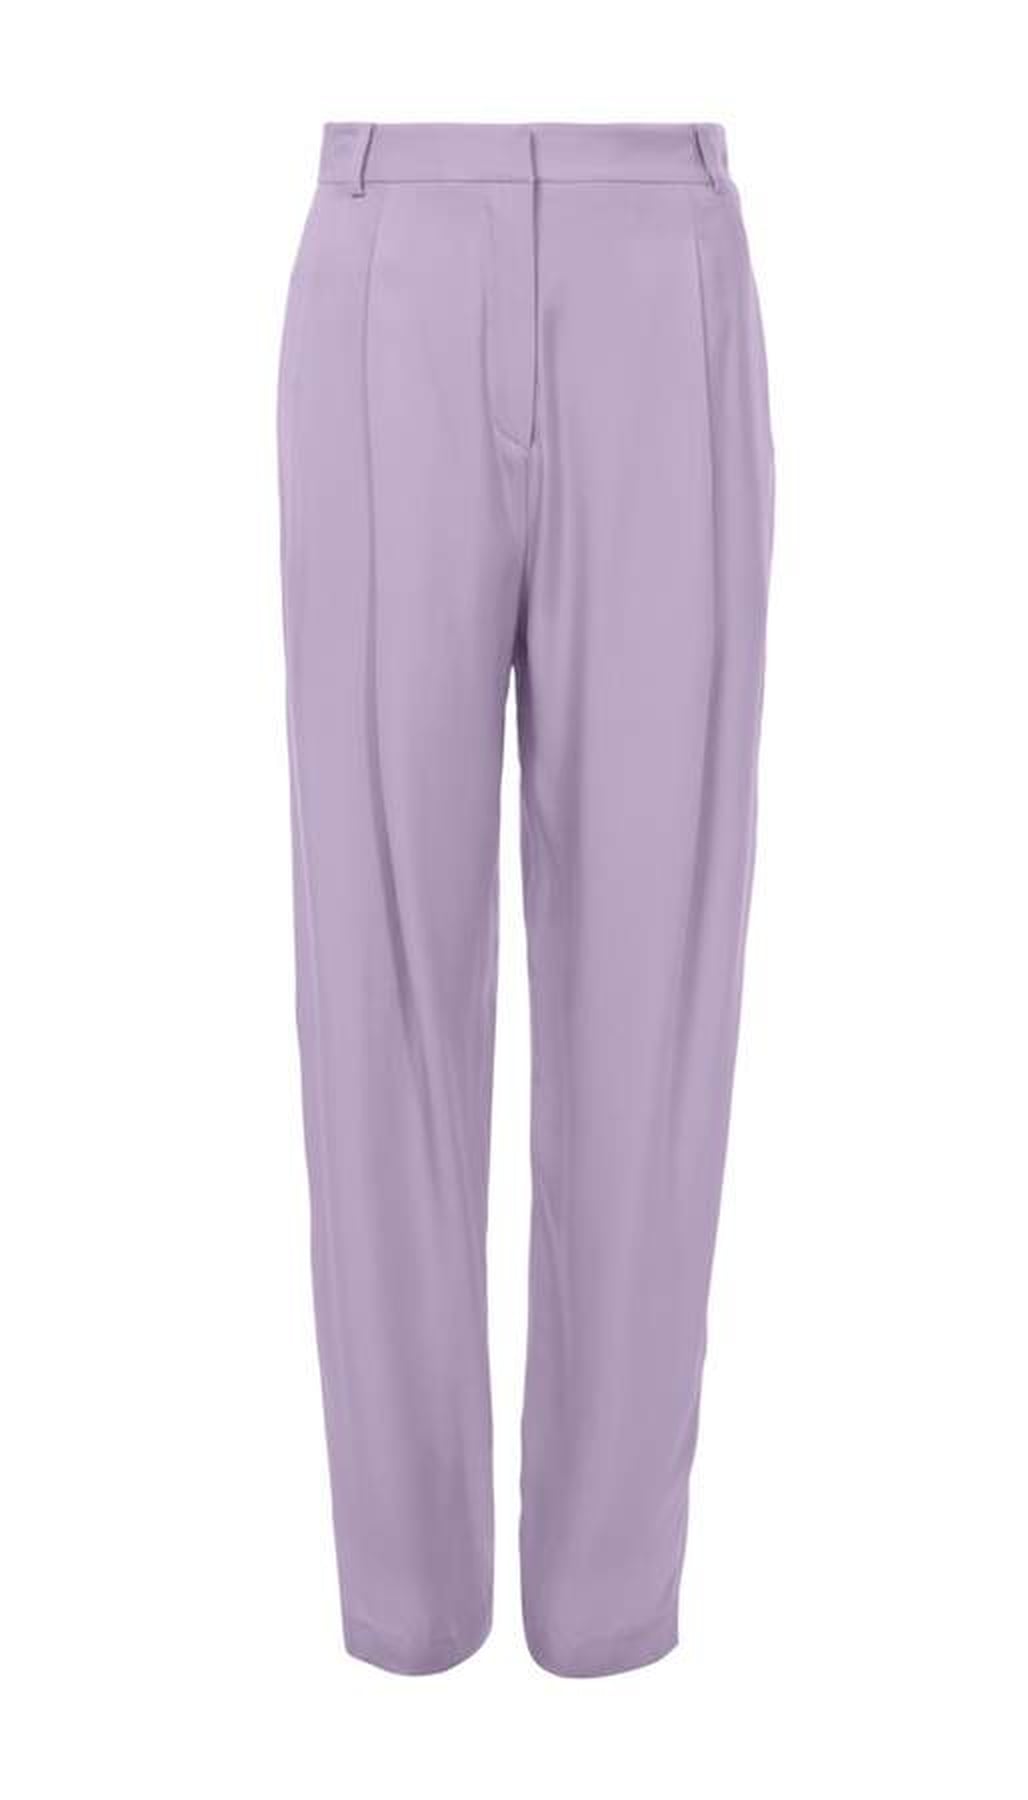 Victoria Beckham Wearing a Purple Suit | POPSUGAR Fashion